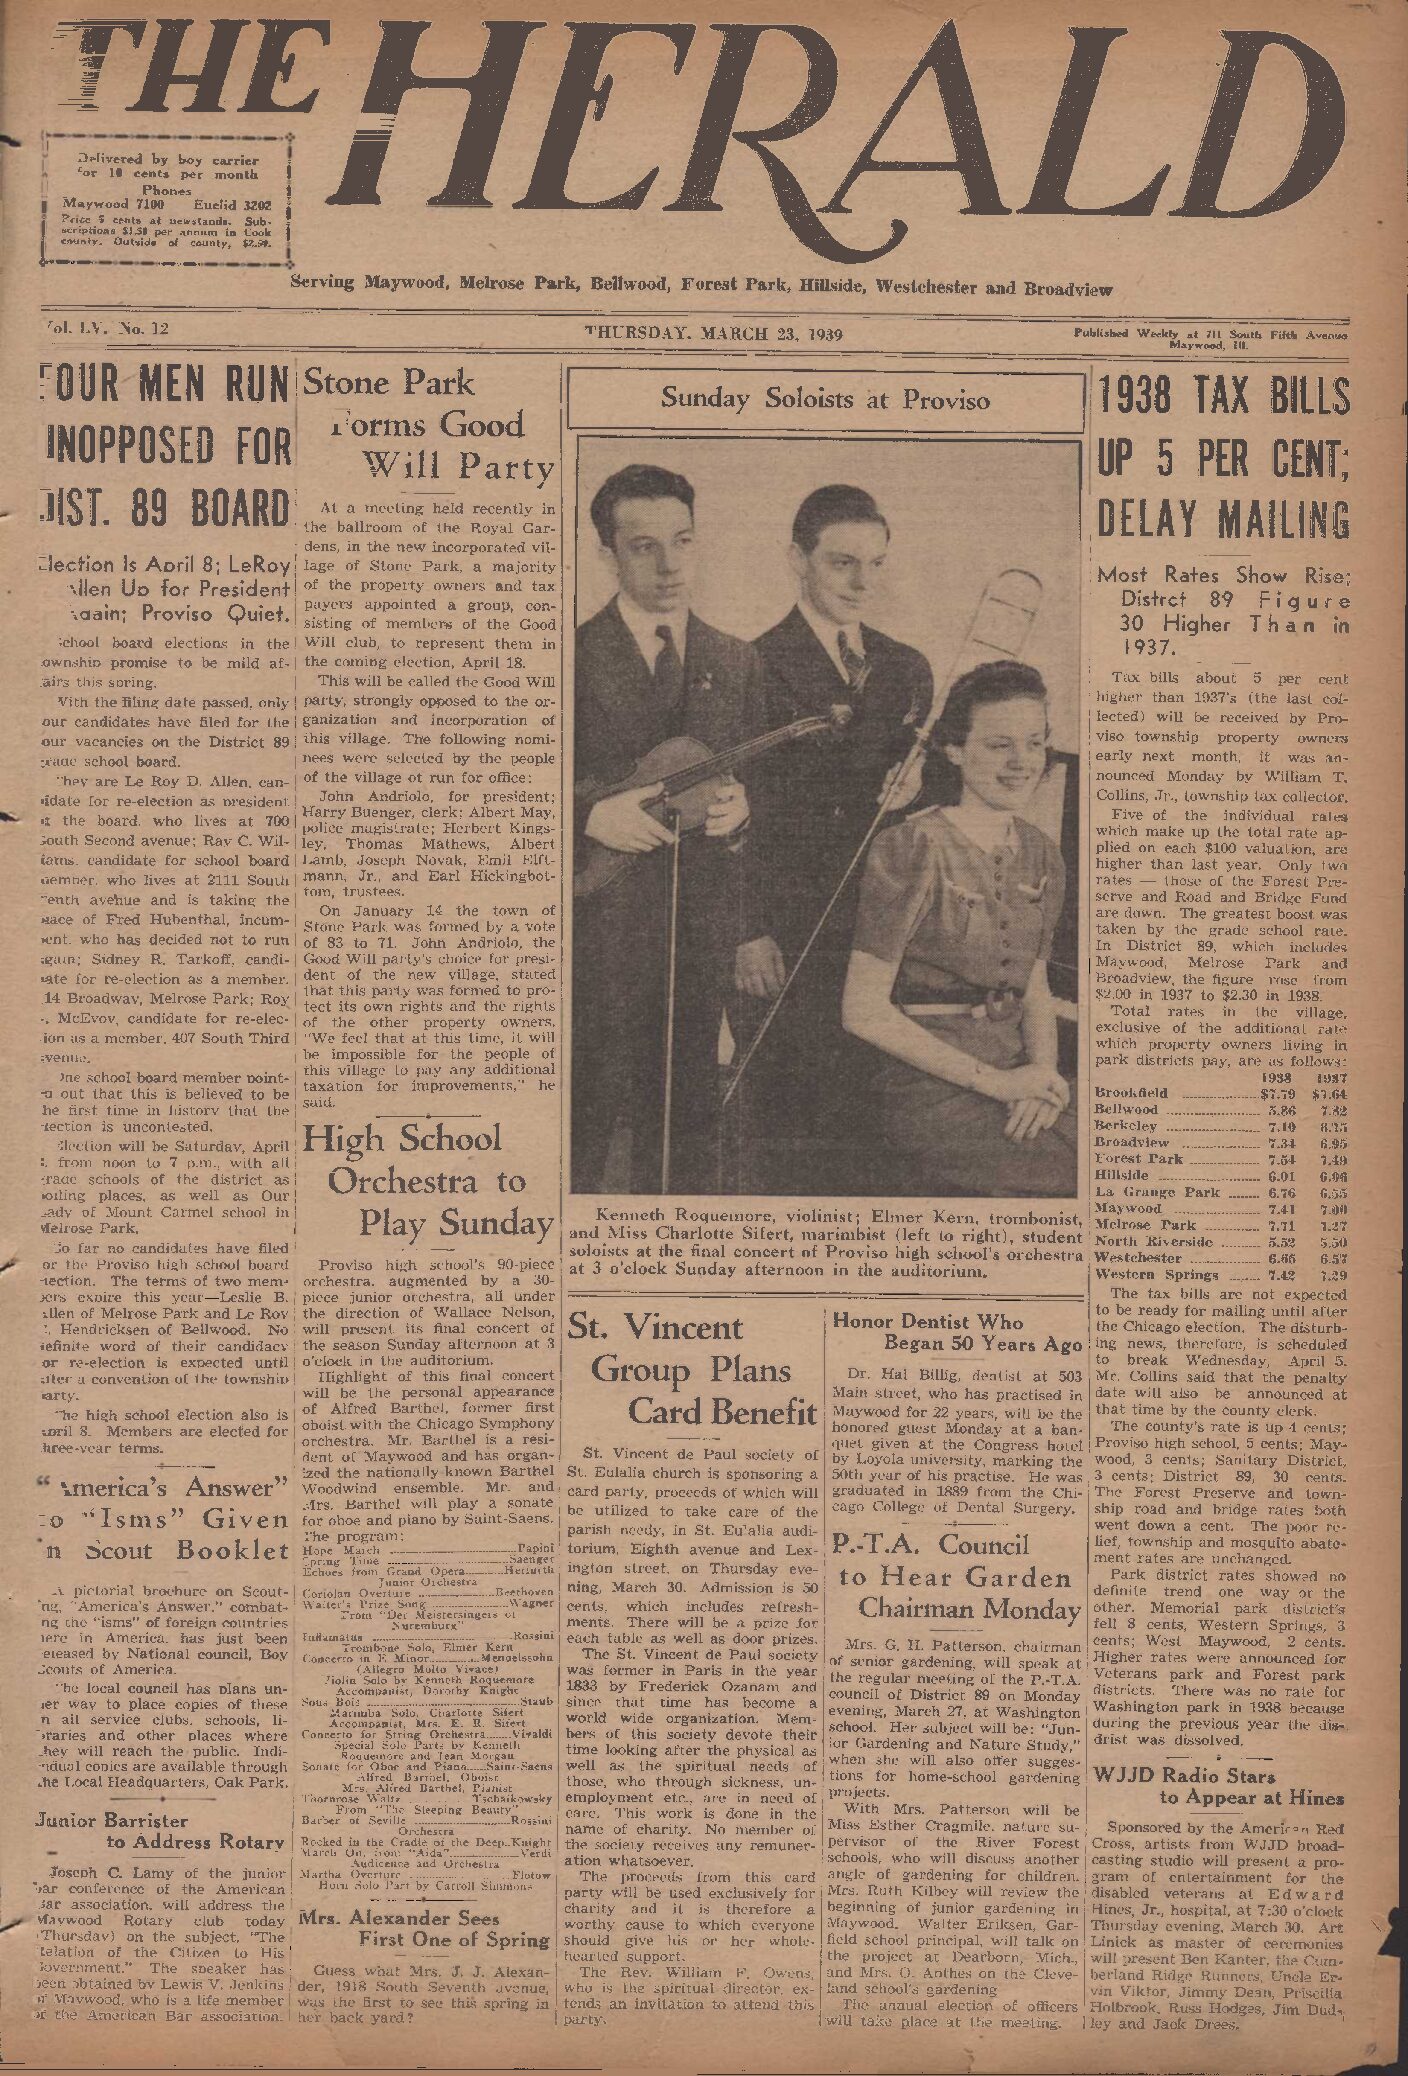 The Herald – 19390323